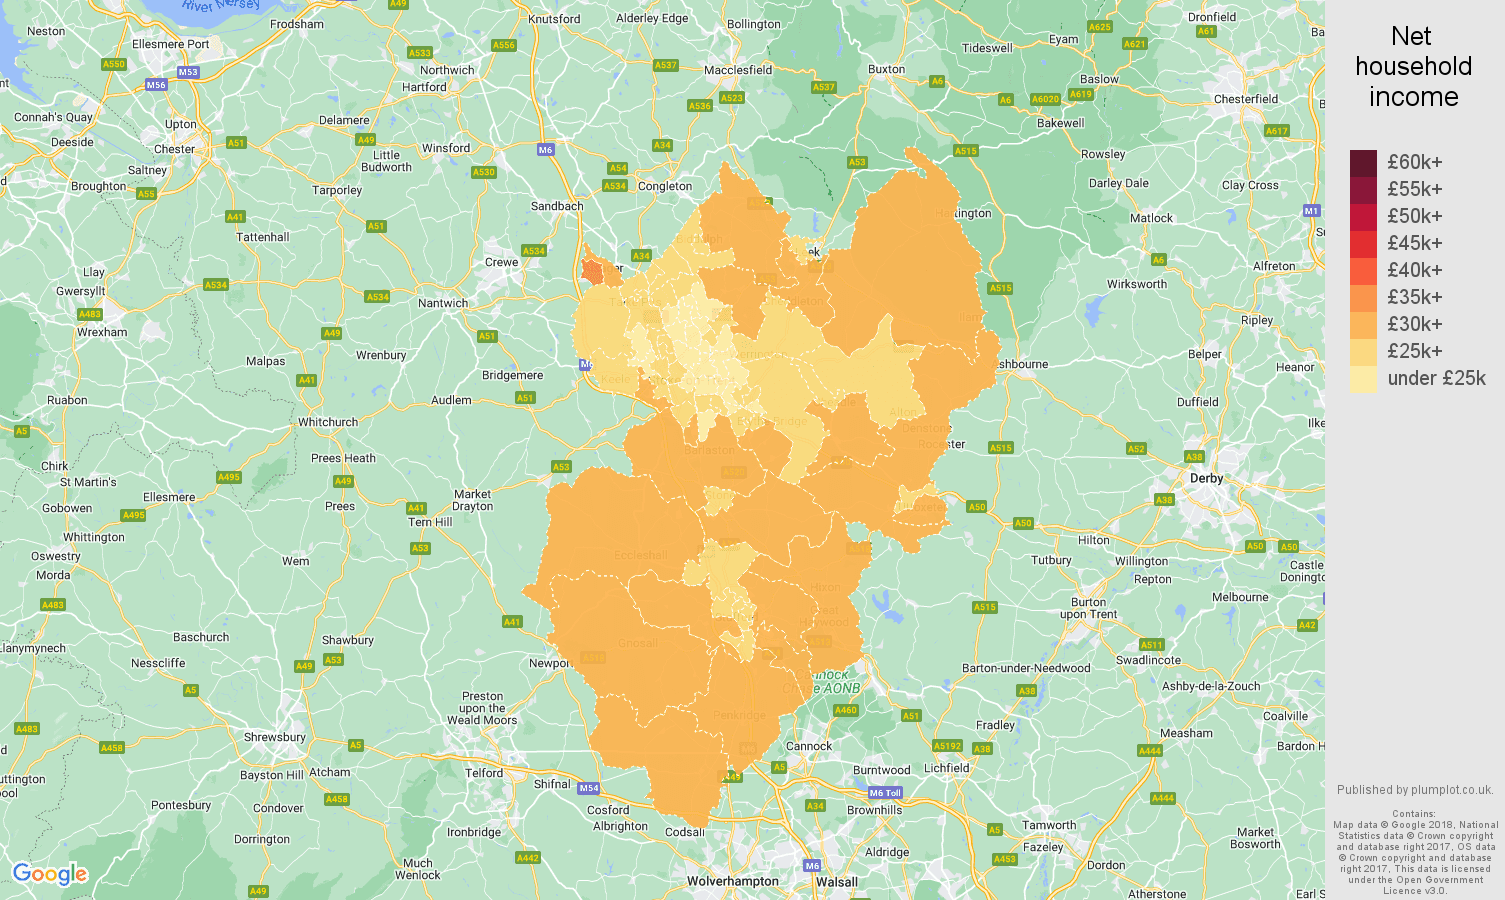 Stoke on Trent net household income map